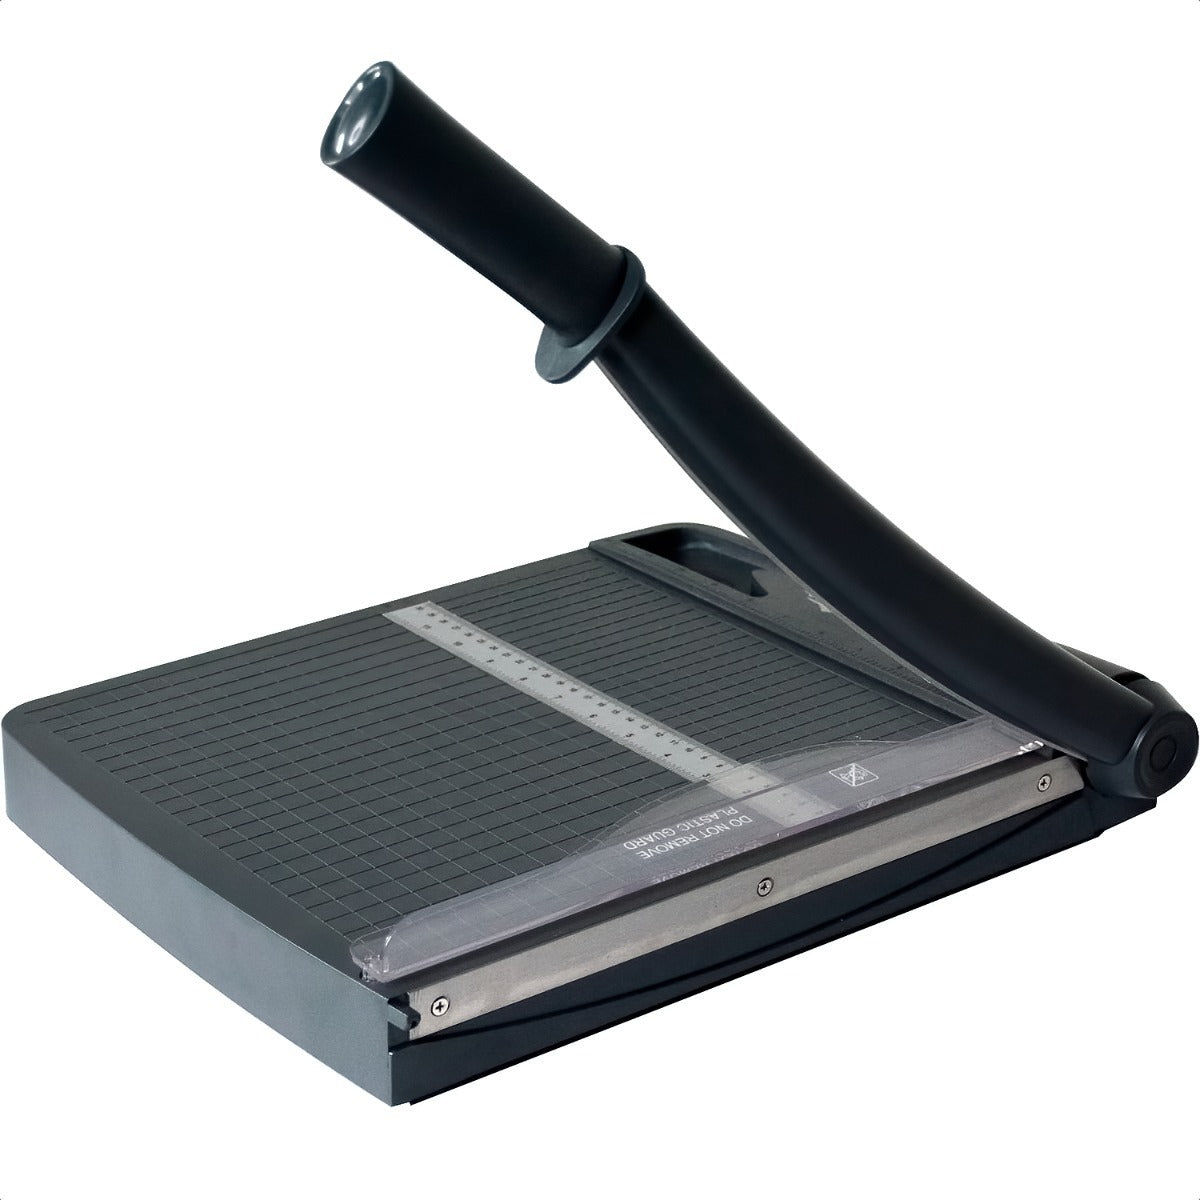  B3 - Cortadora de guillotina, cortadora de tamaño de papel,  cortadora de papel de 20.866 in, grosor de corte, 1.2 in, color blanco :  Productos de Oficina